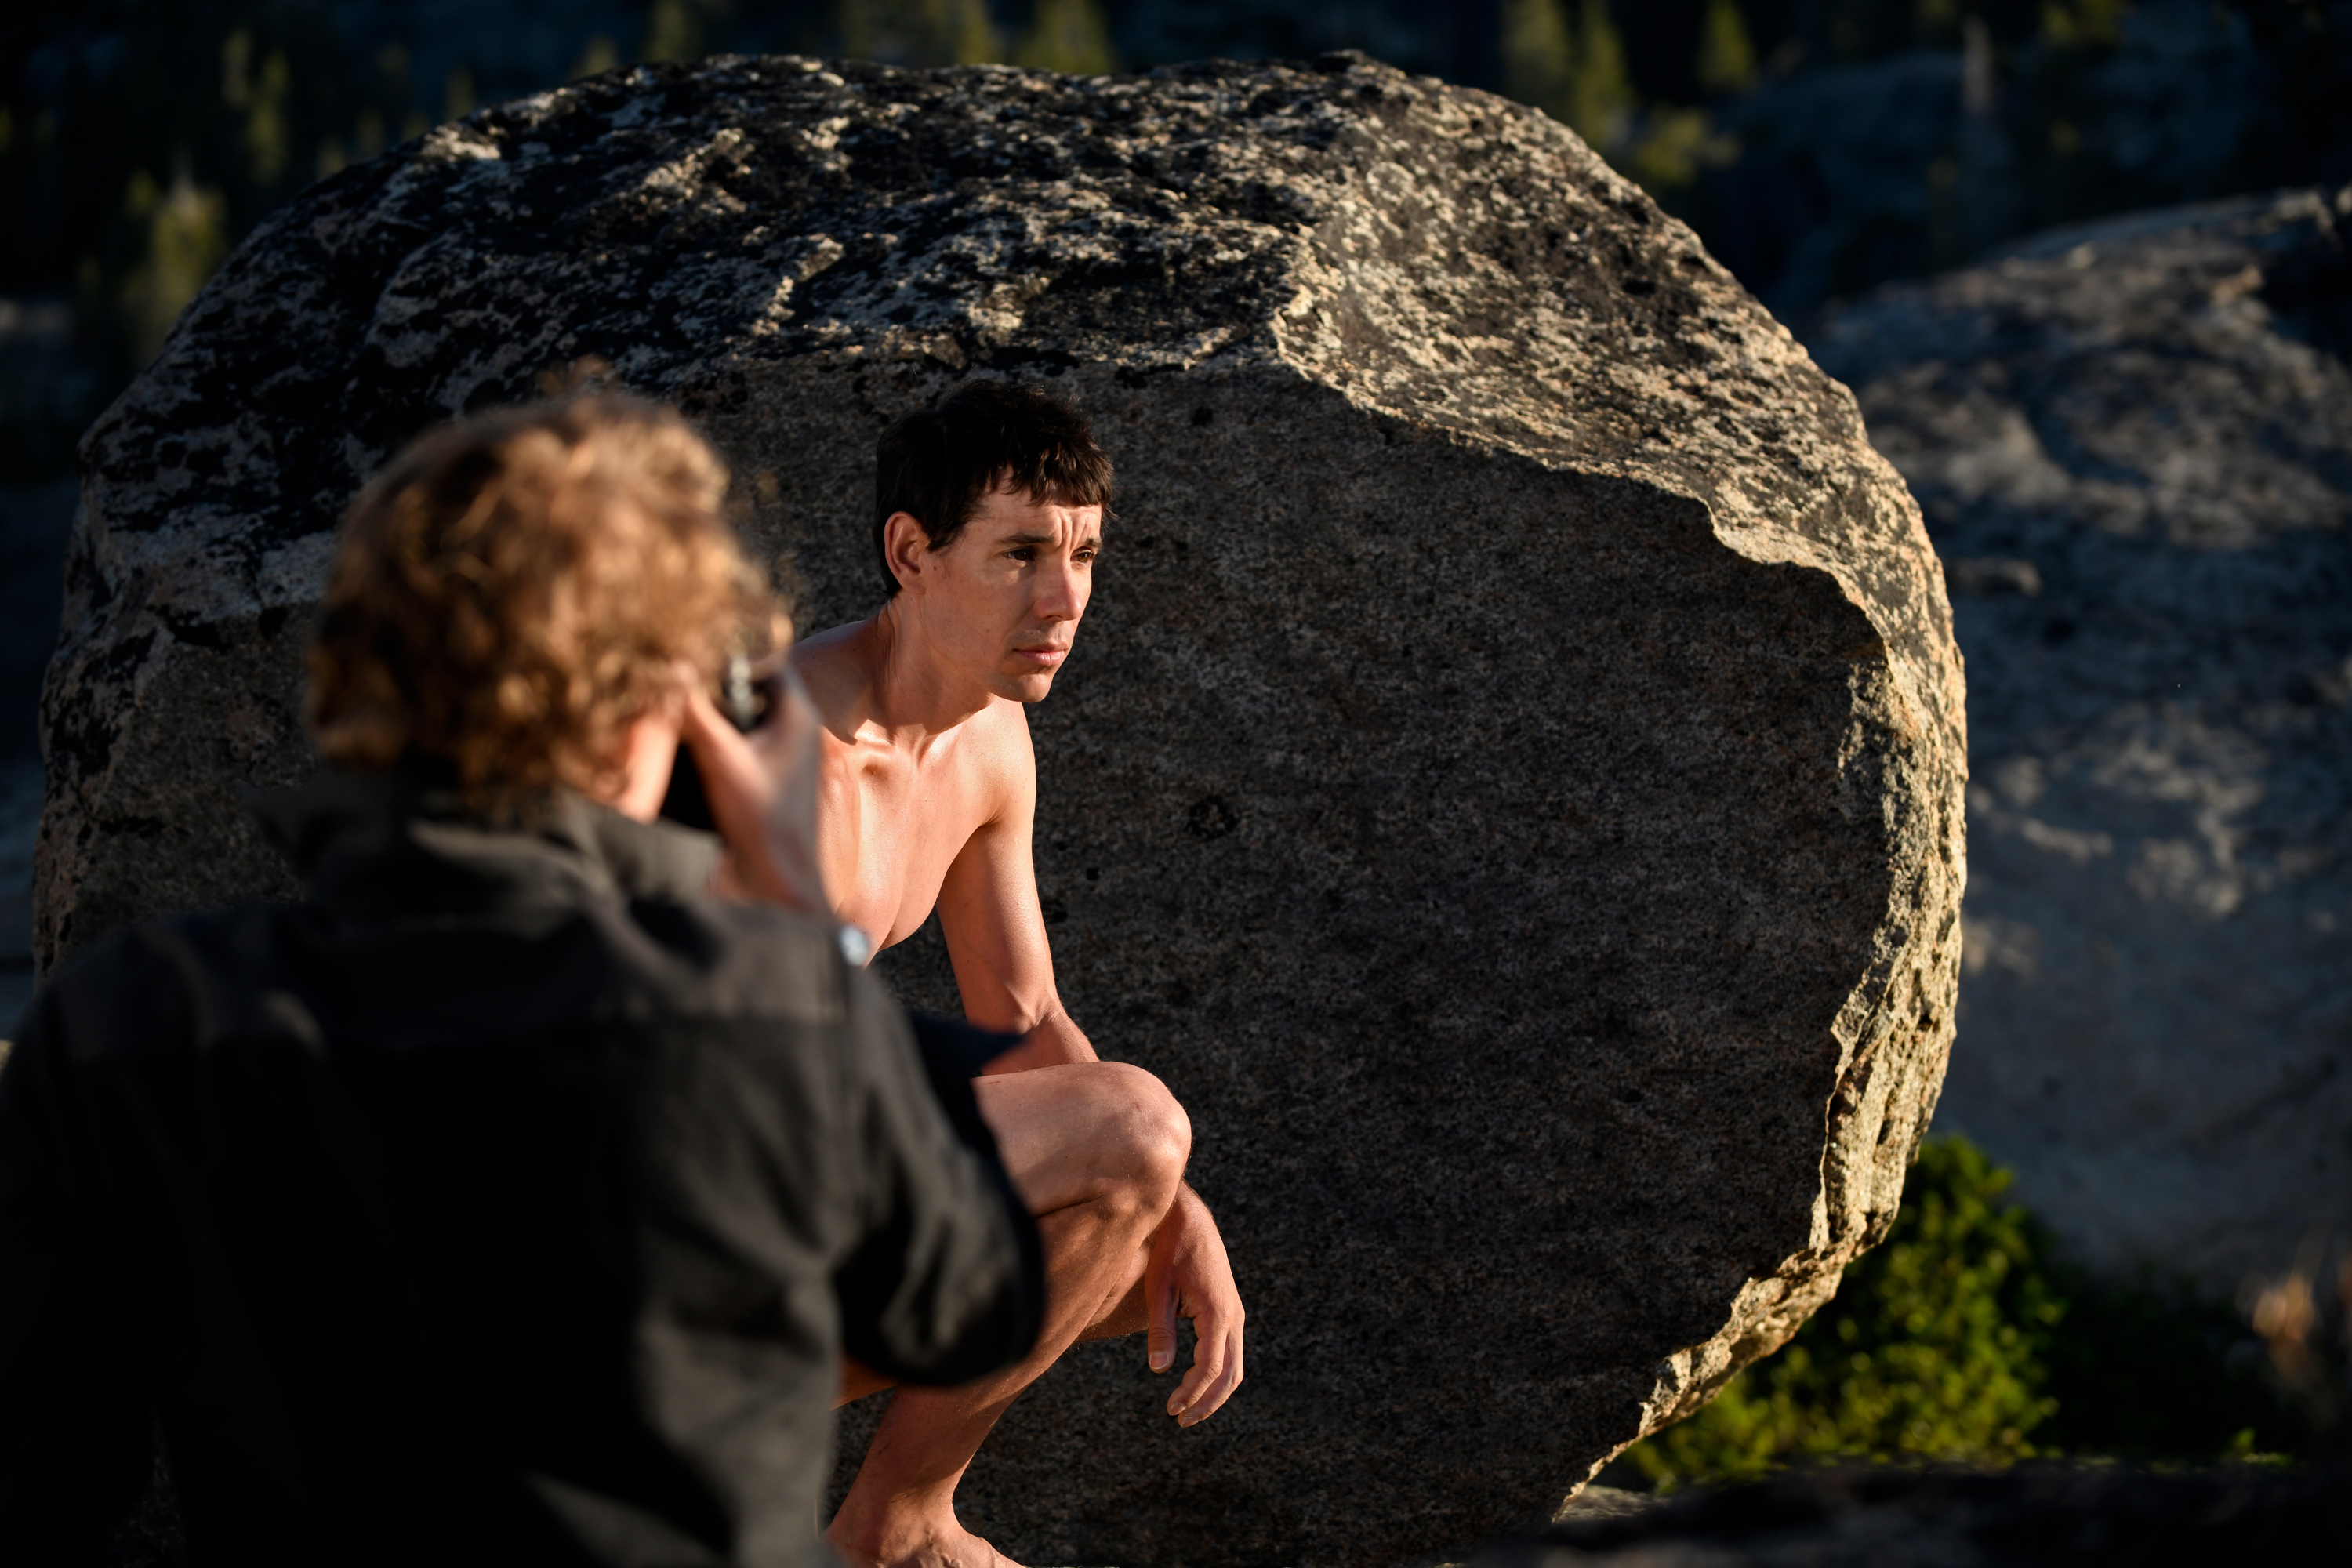 carmen neufeld share nude rock climbing photos